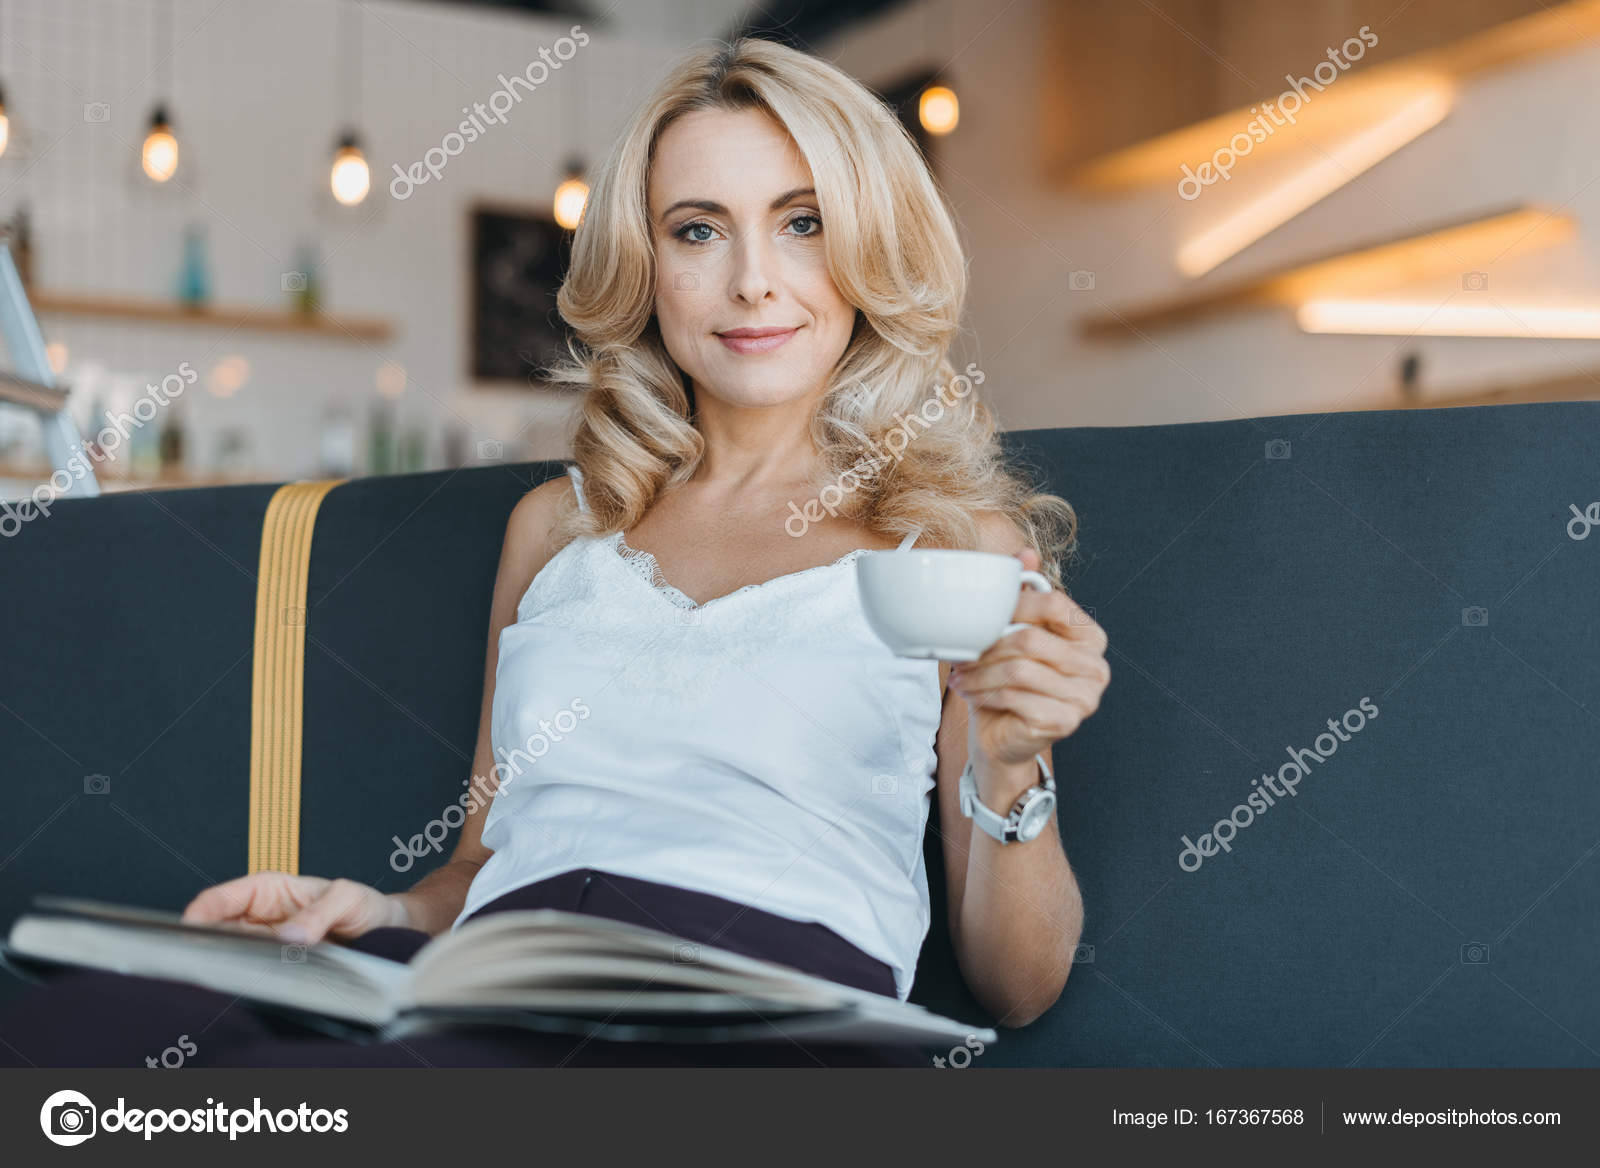 depositphotos_167367568-stock-photo-woman-reading-book-in-cafe.jpg